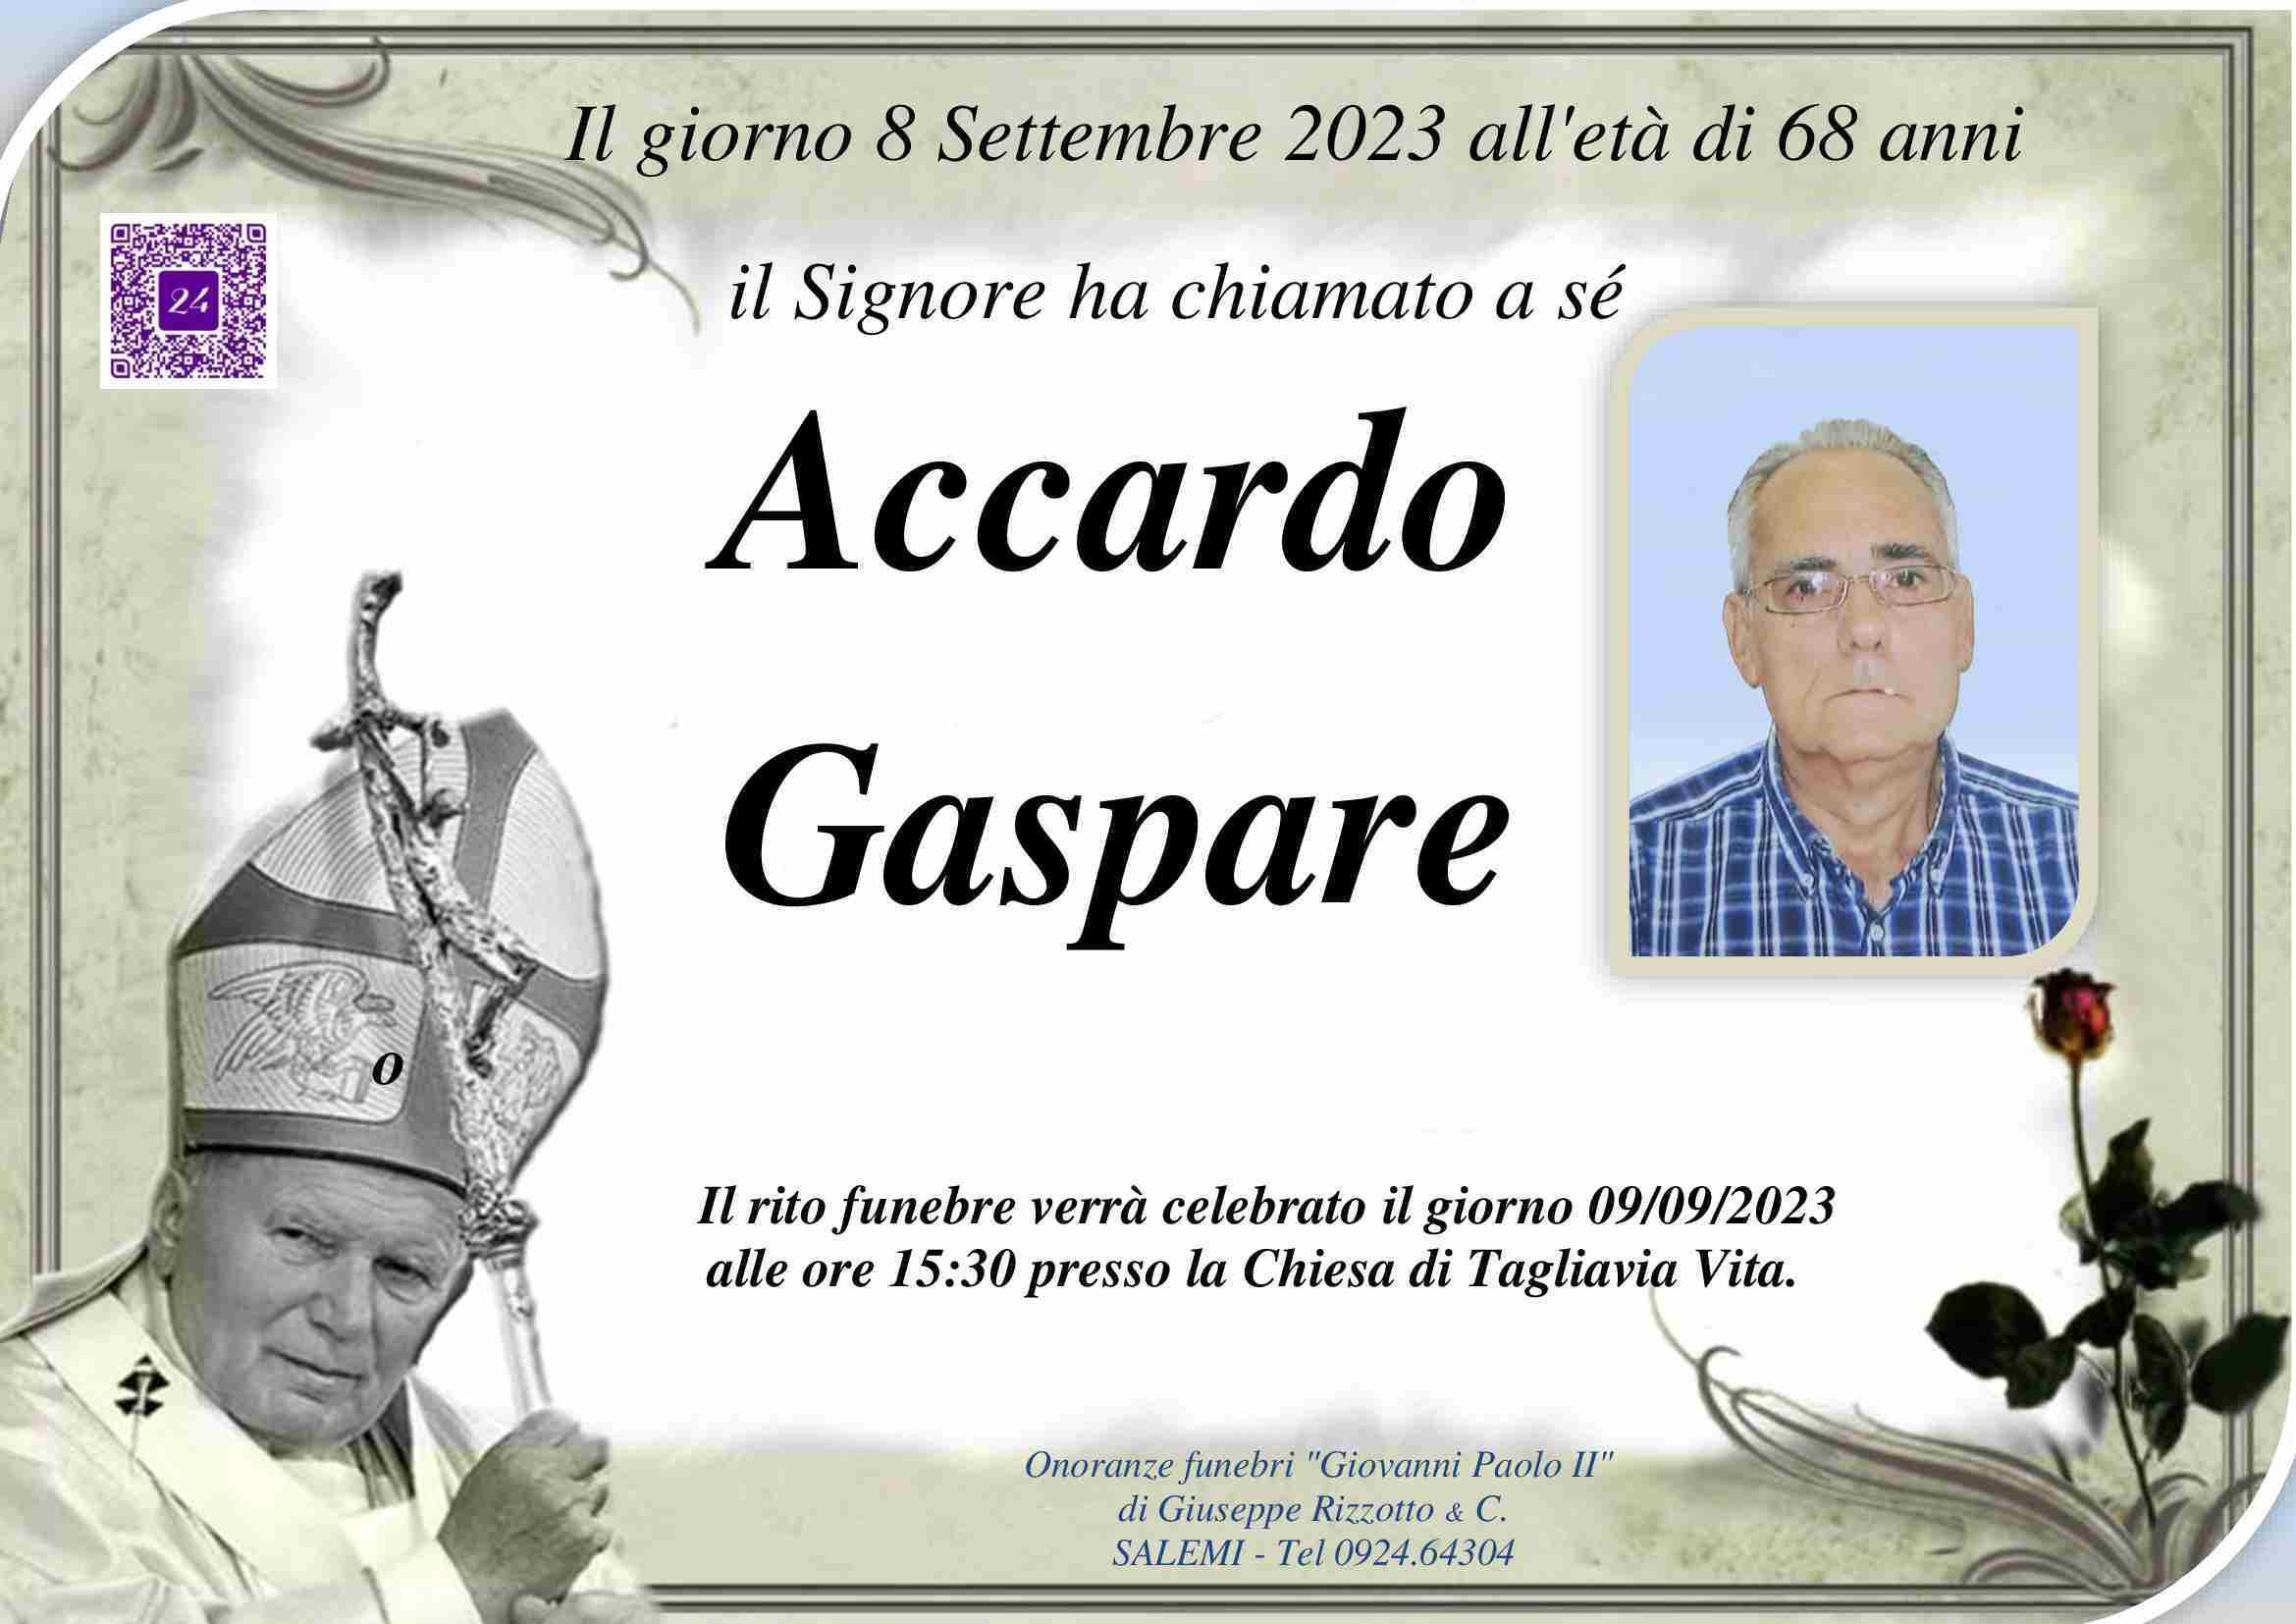 Gaspare Accardo